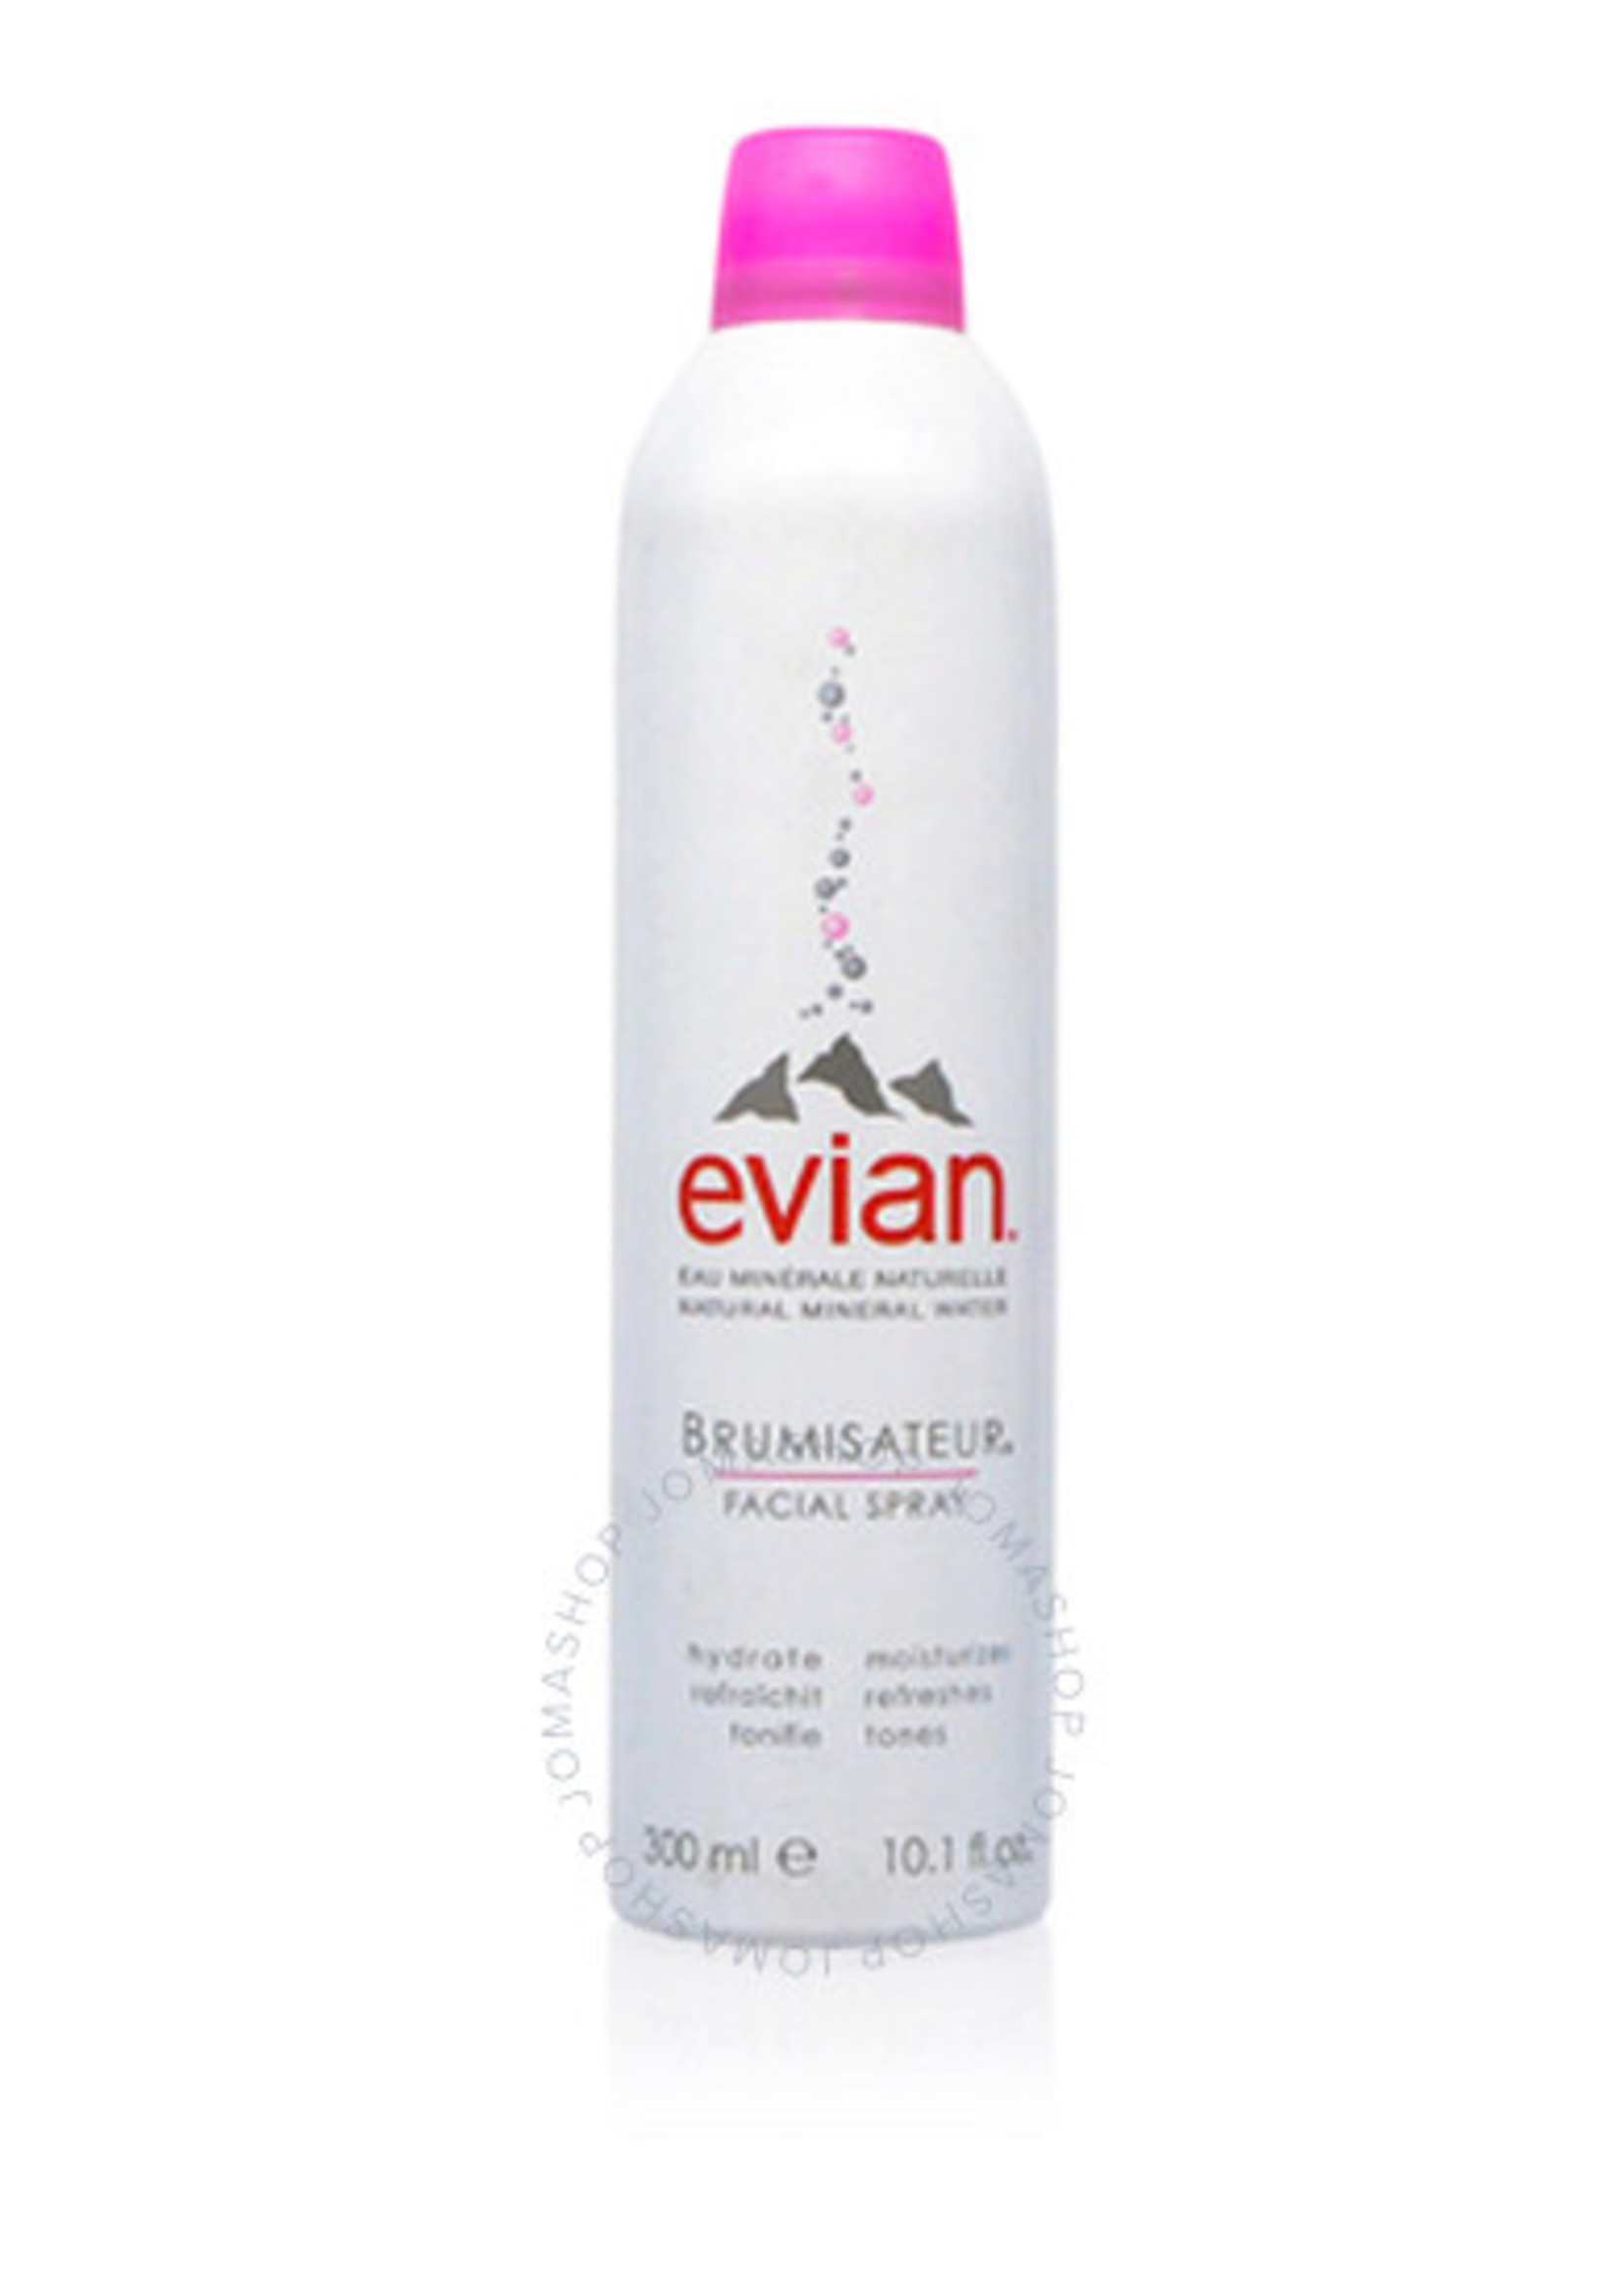 EVIAN/ Brumisateur Facial Water Spray  300ml